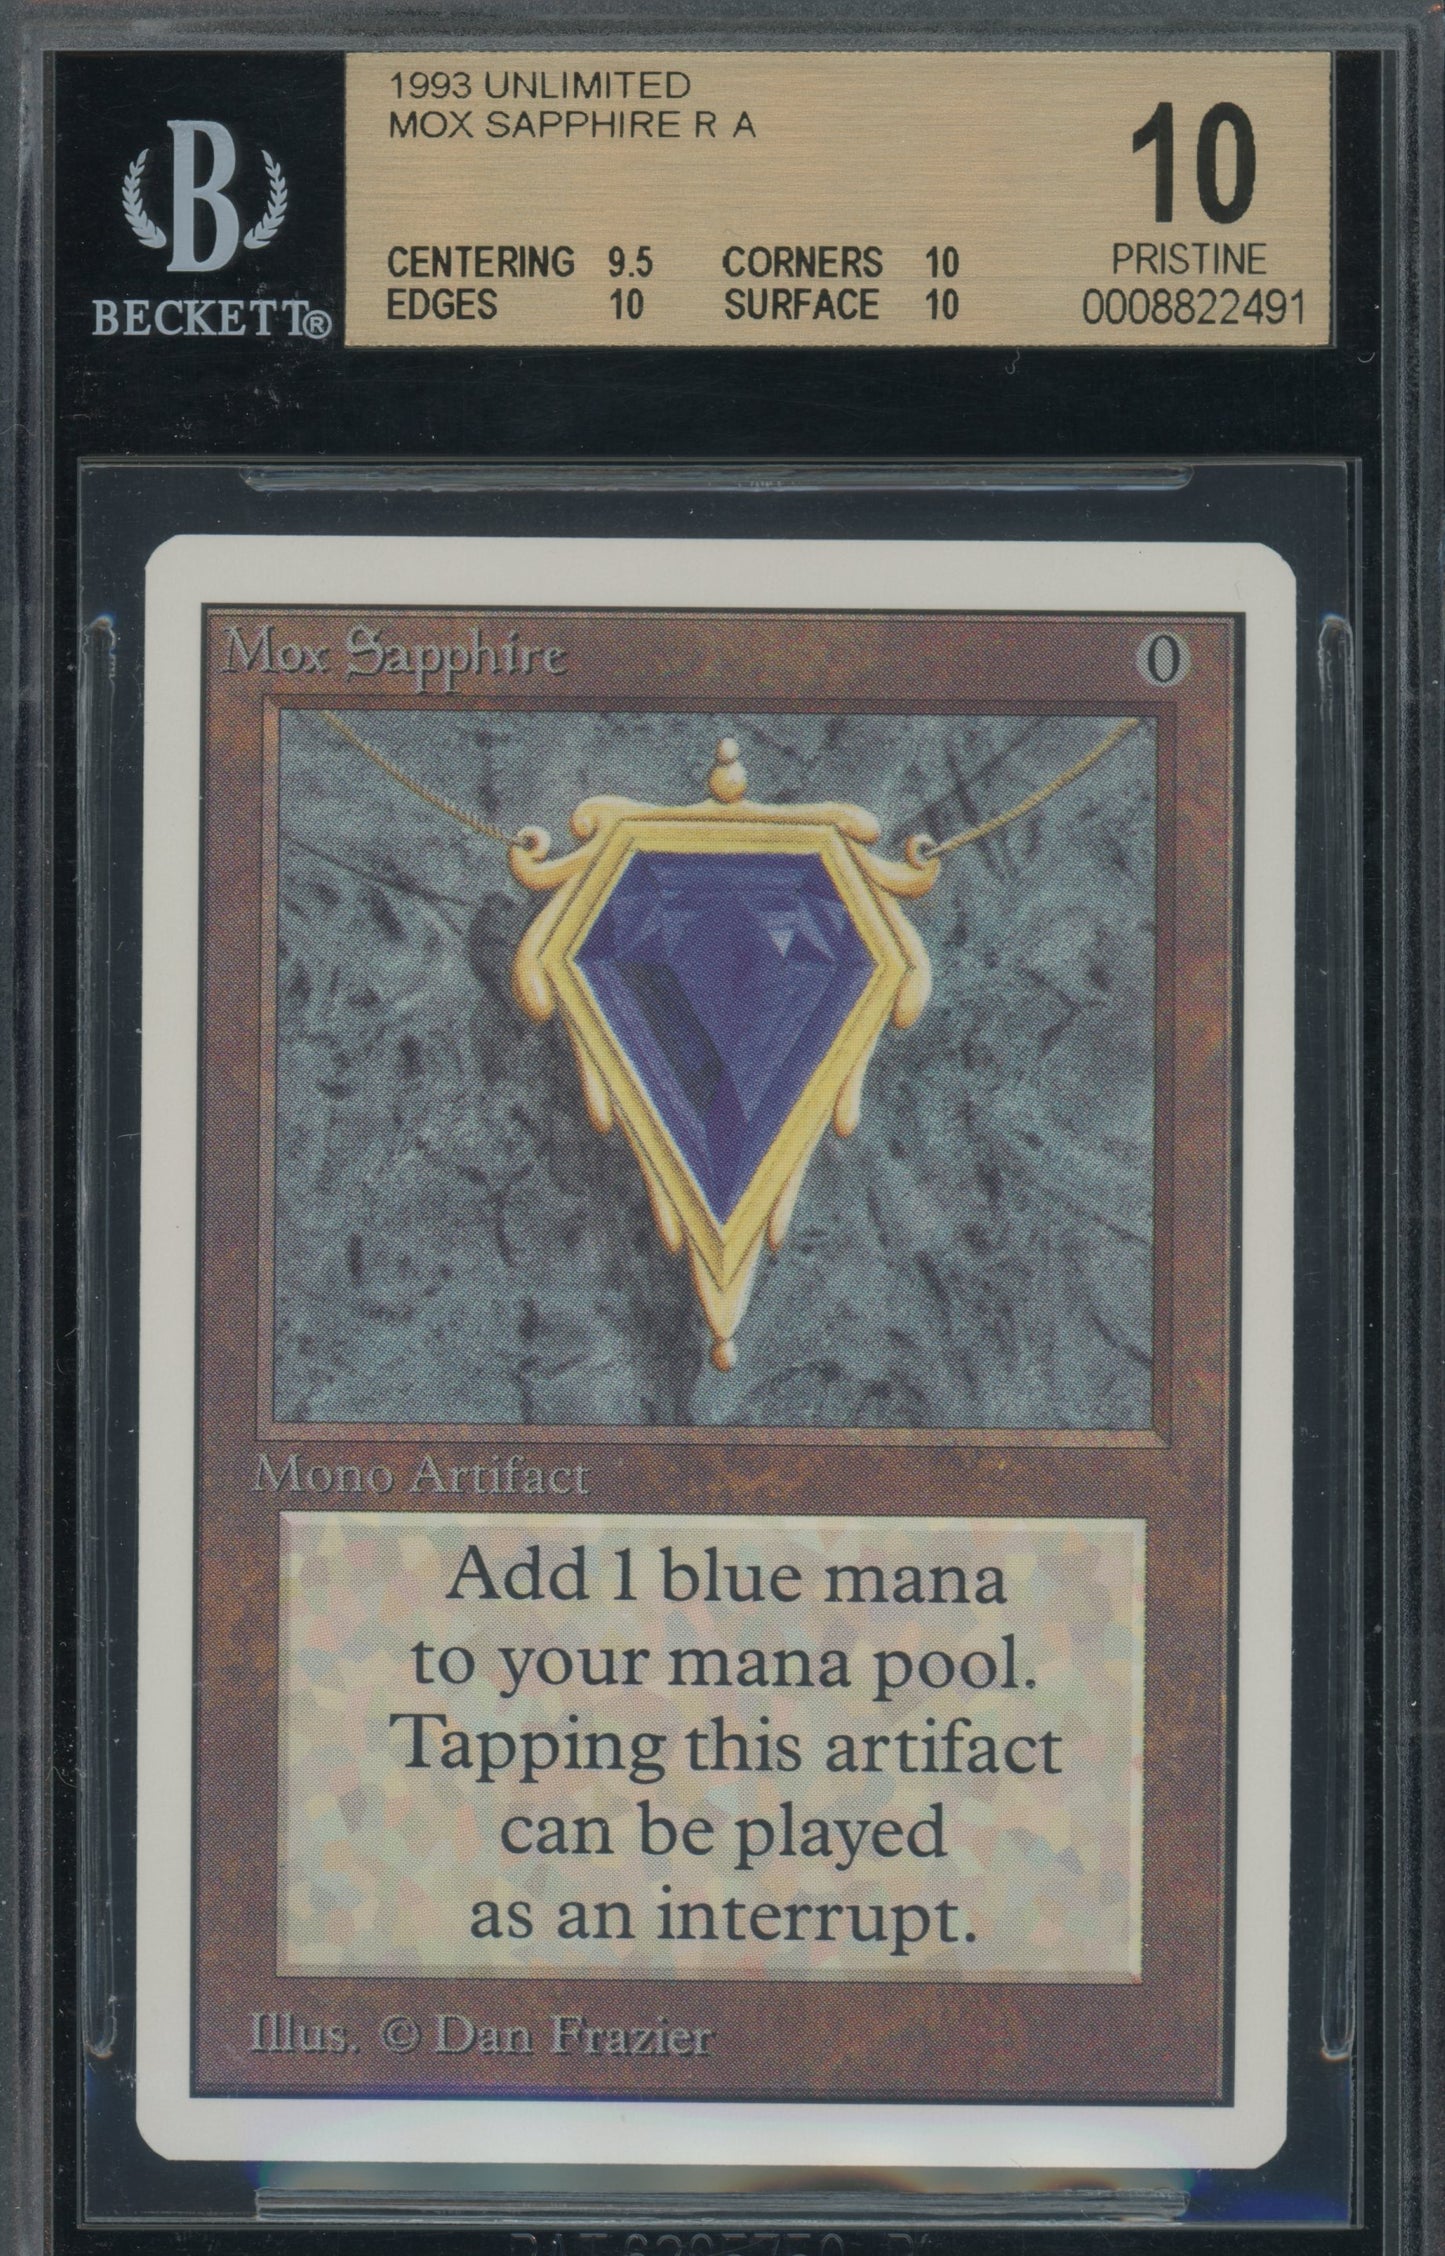 Mox Sapphire Unlimited BGS 10 - 8822491